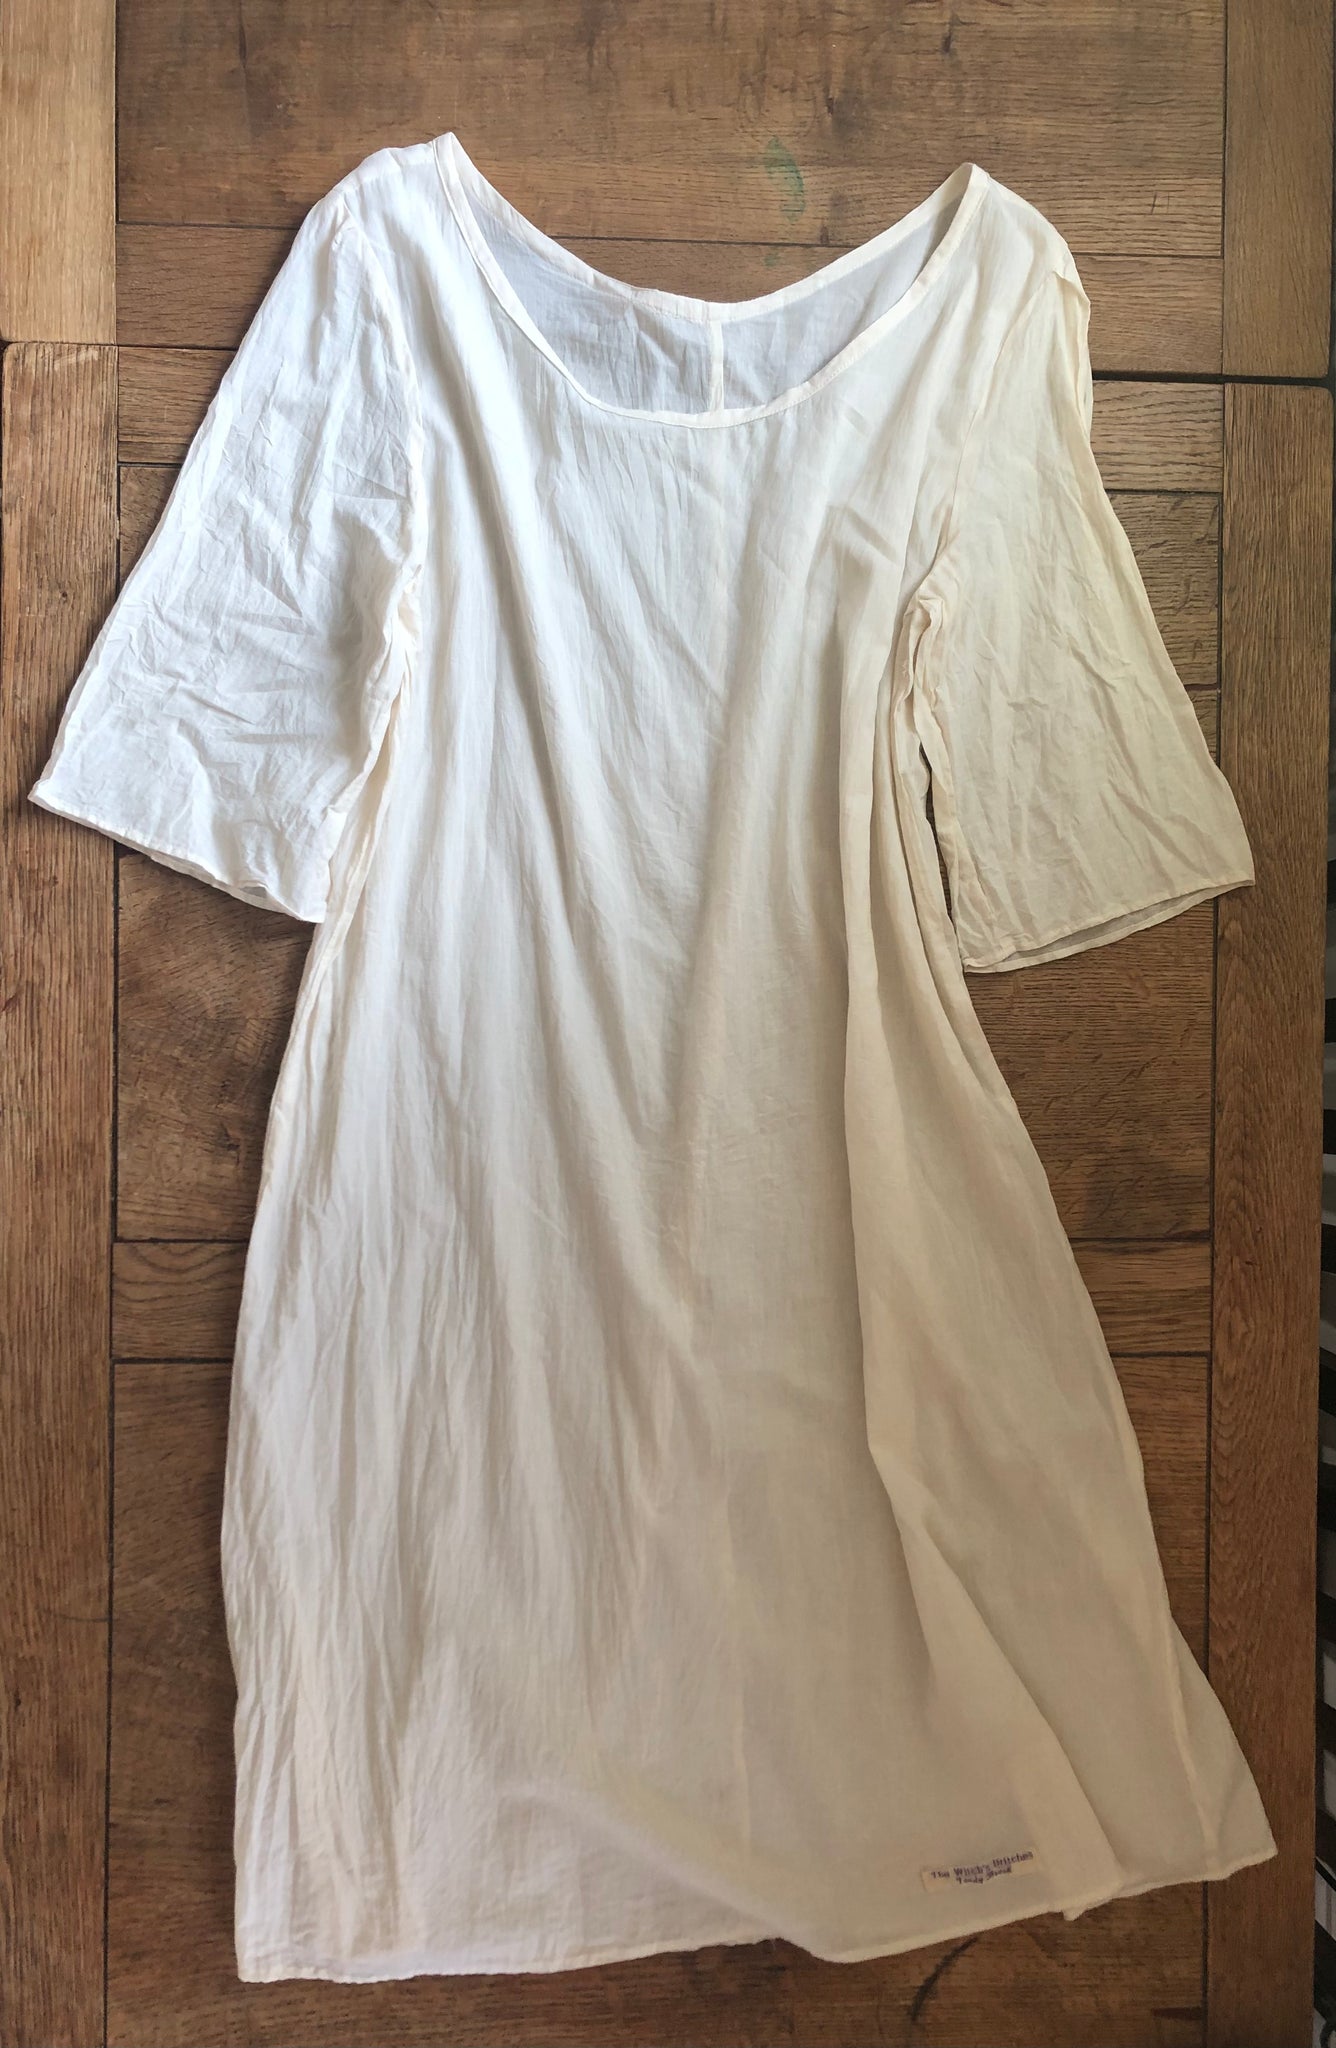 Unbleached organic cotton batiste women's chemise dress (All sizes)